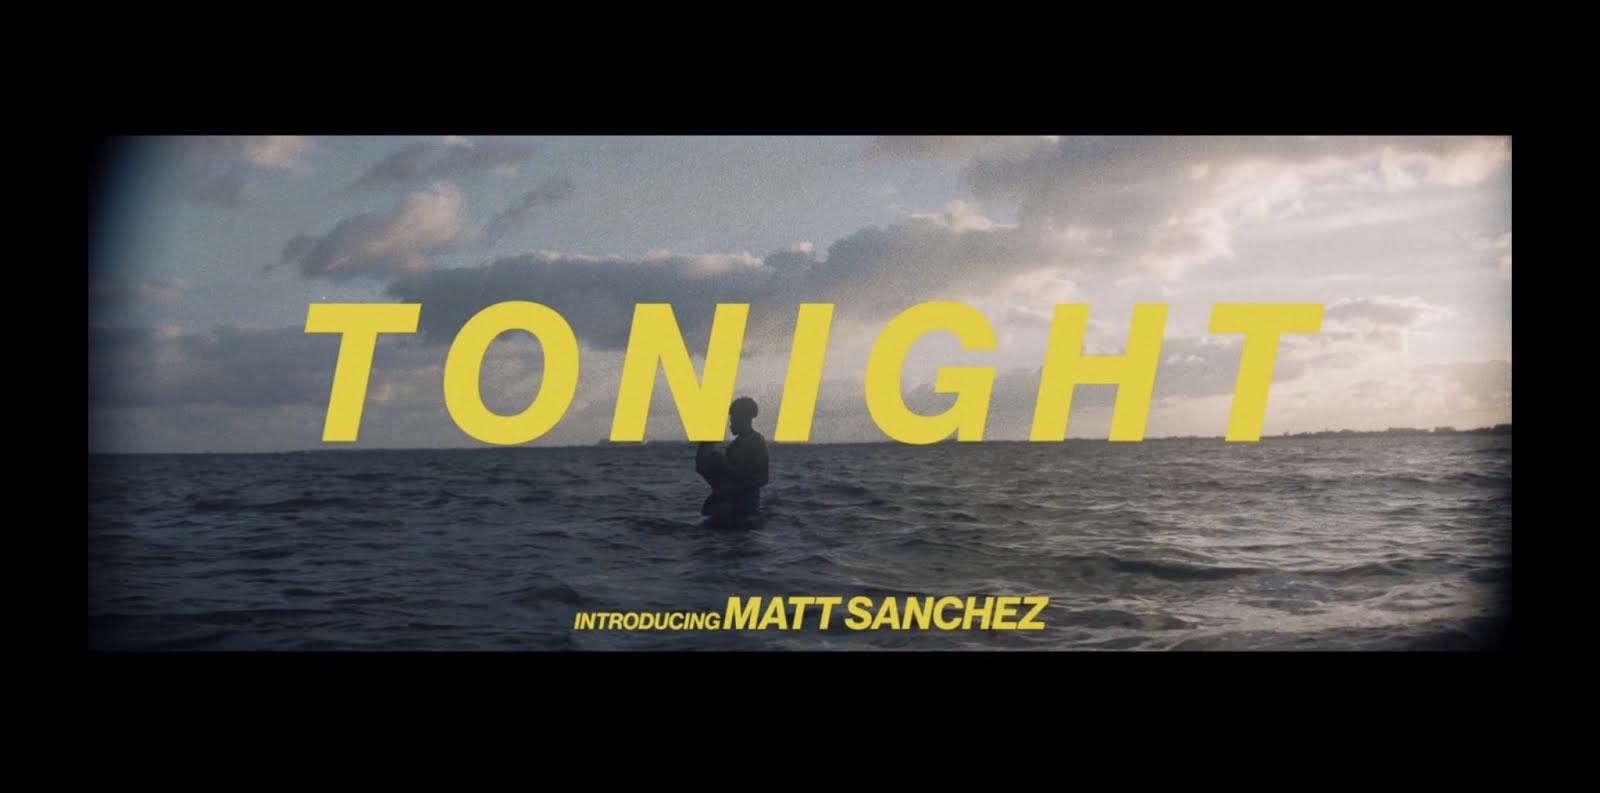 Matt Sanchez is focused on positive energy with new single “Tonight”